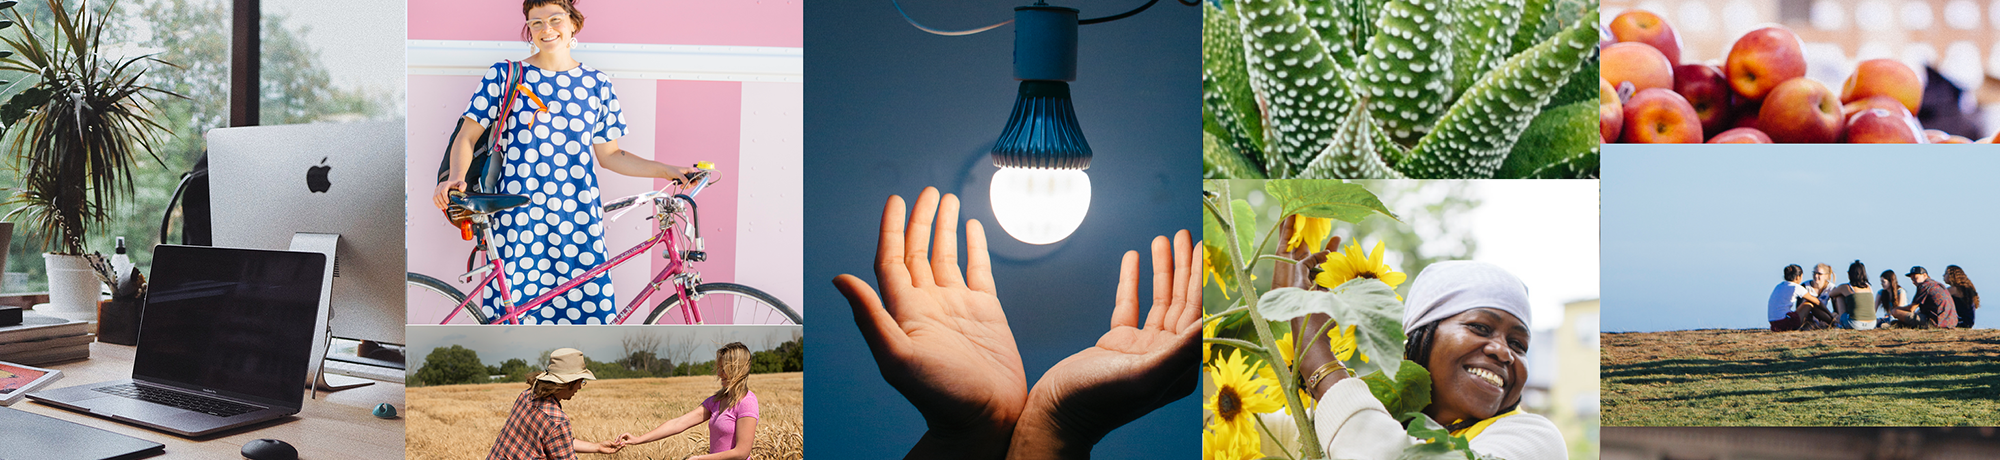 collage of sustainability imagery on cmapus